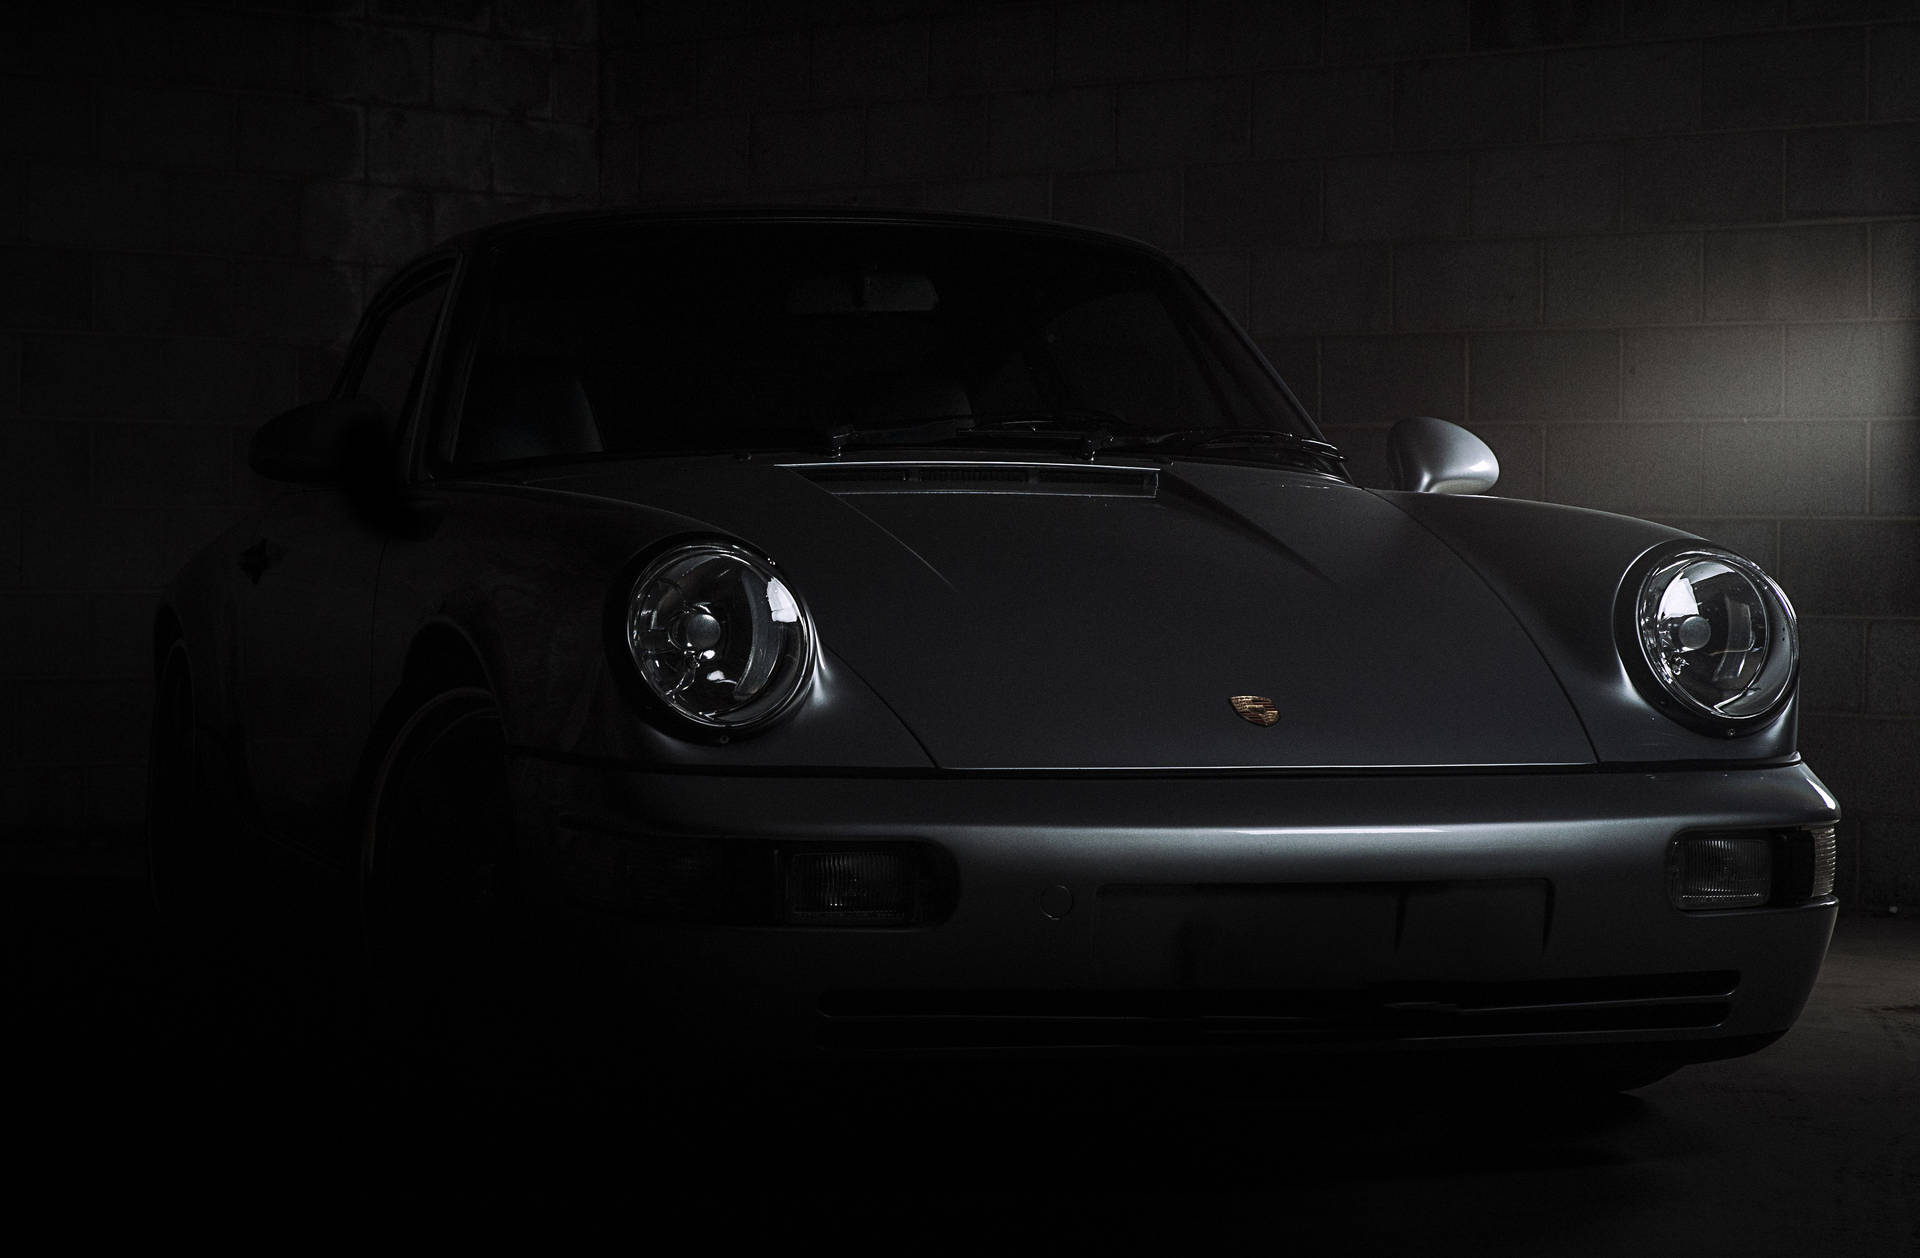 Porsche 911 In Matte Black Wallpaper